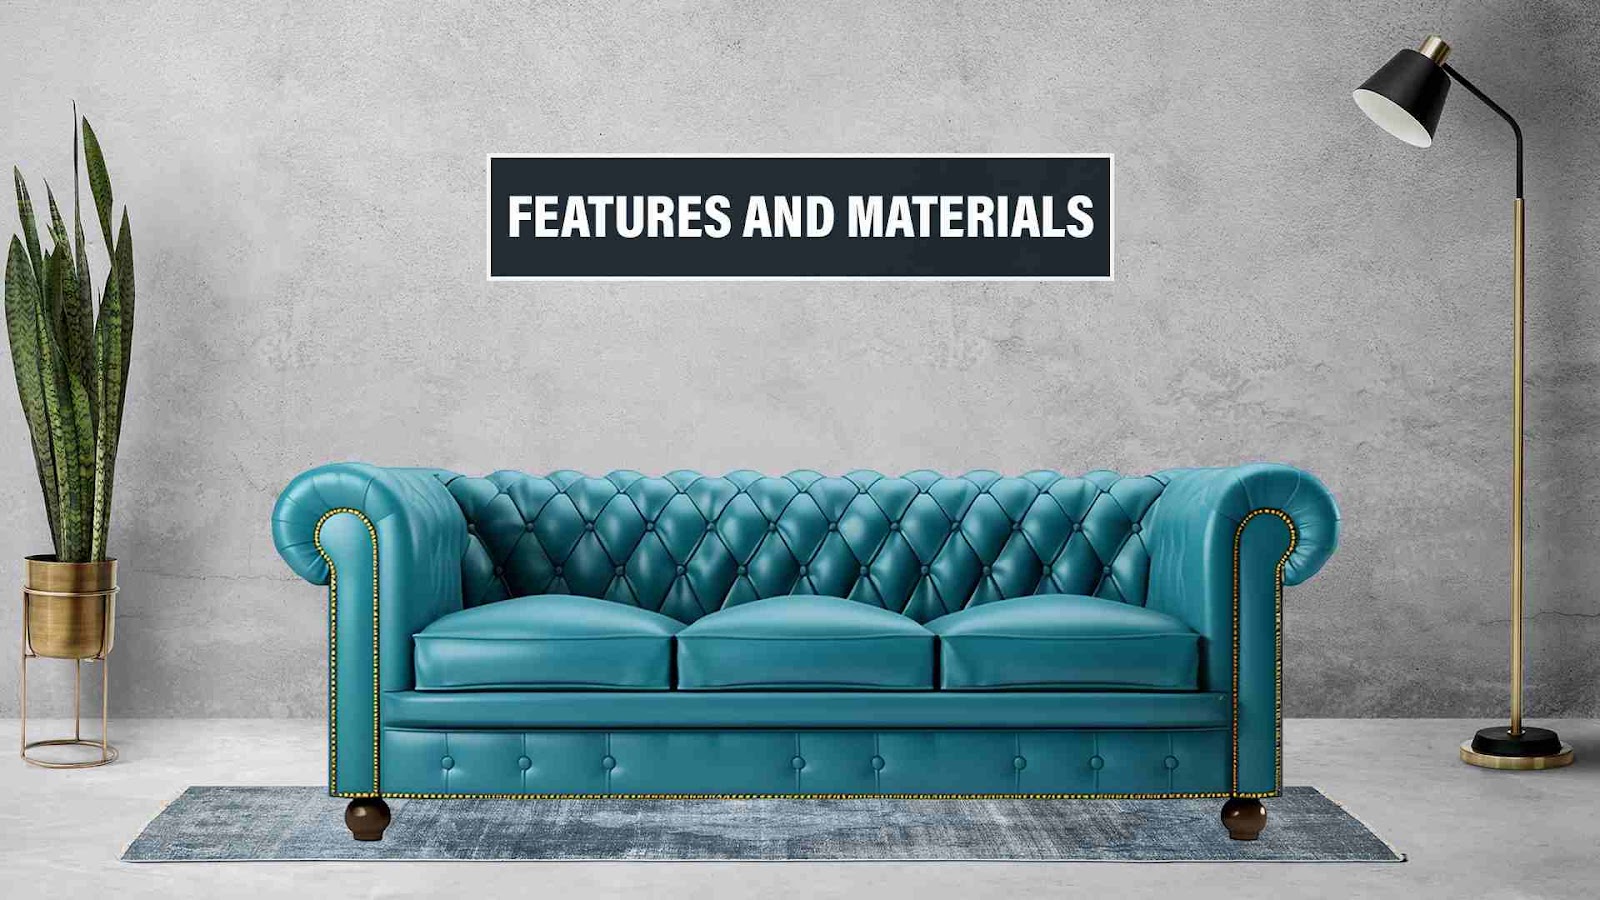 modern chesterfield sofa